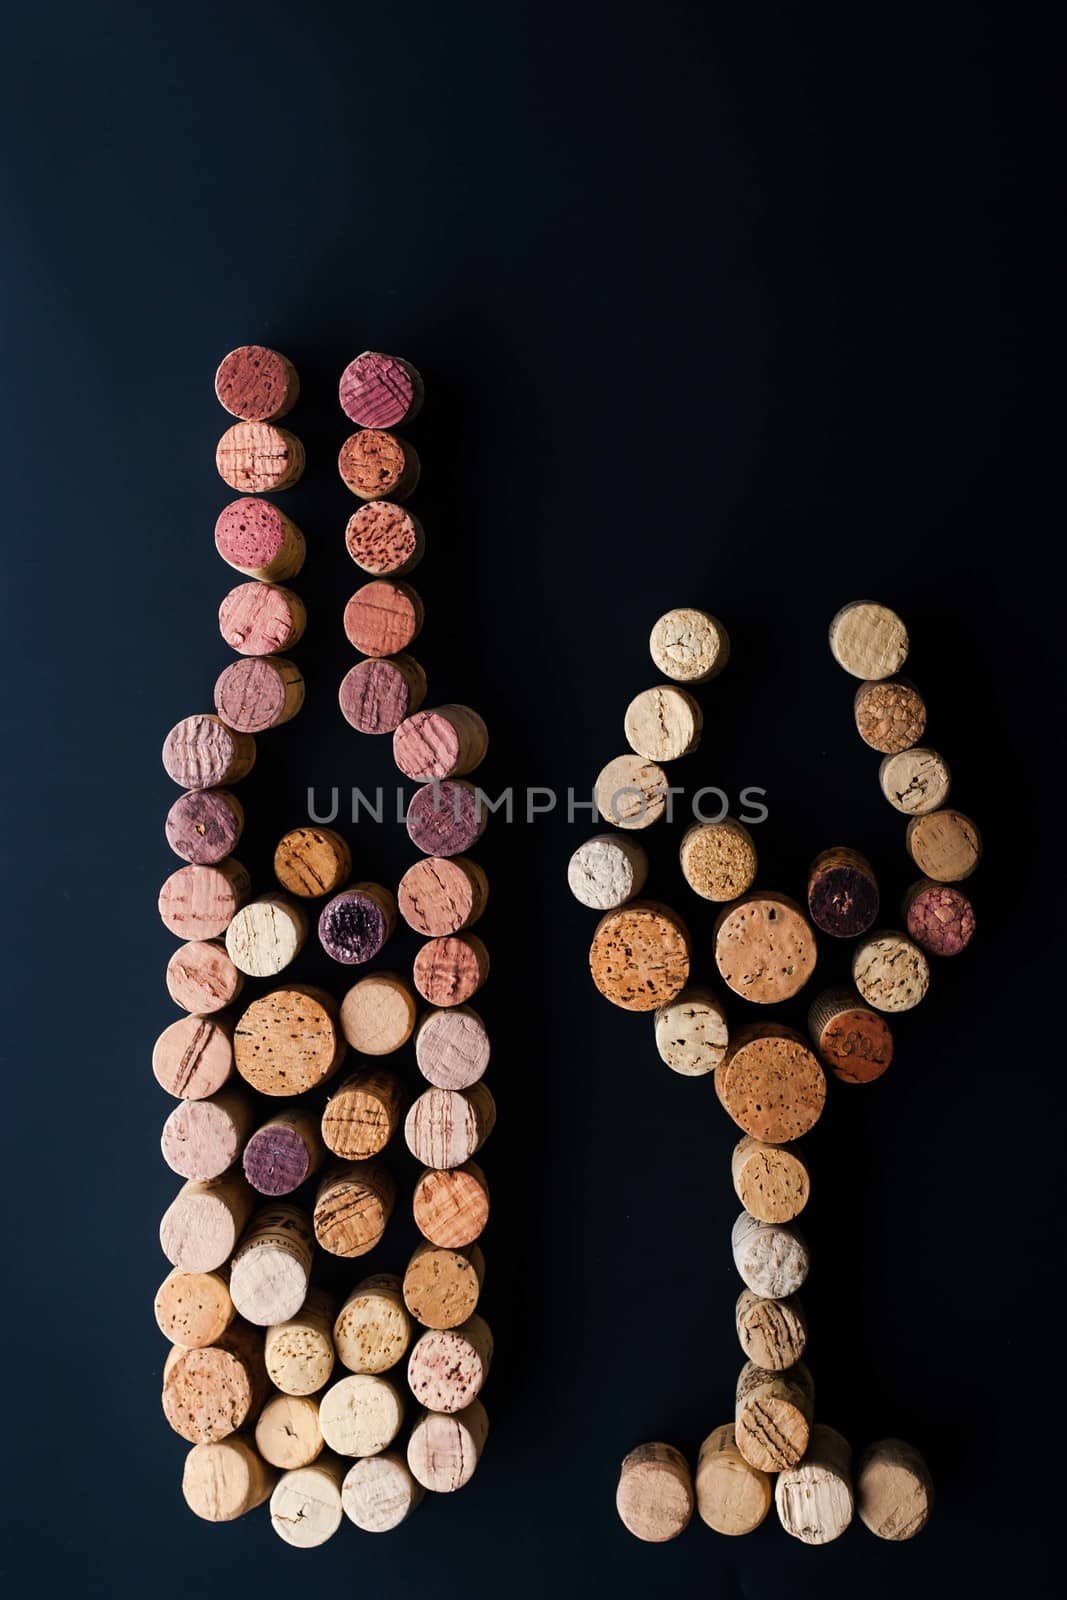 Wine bottle and glass made by corks by Deniskarpenkov